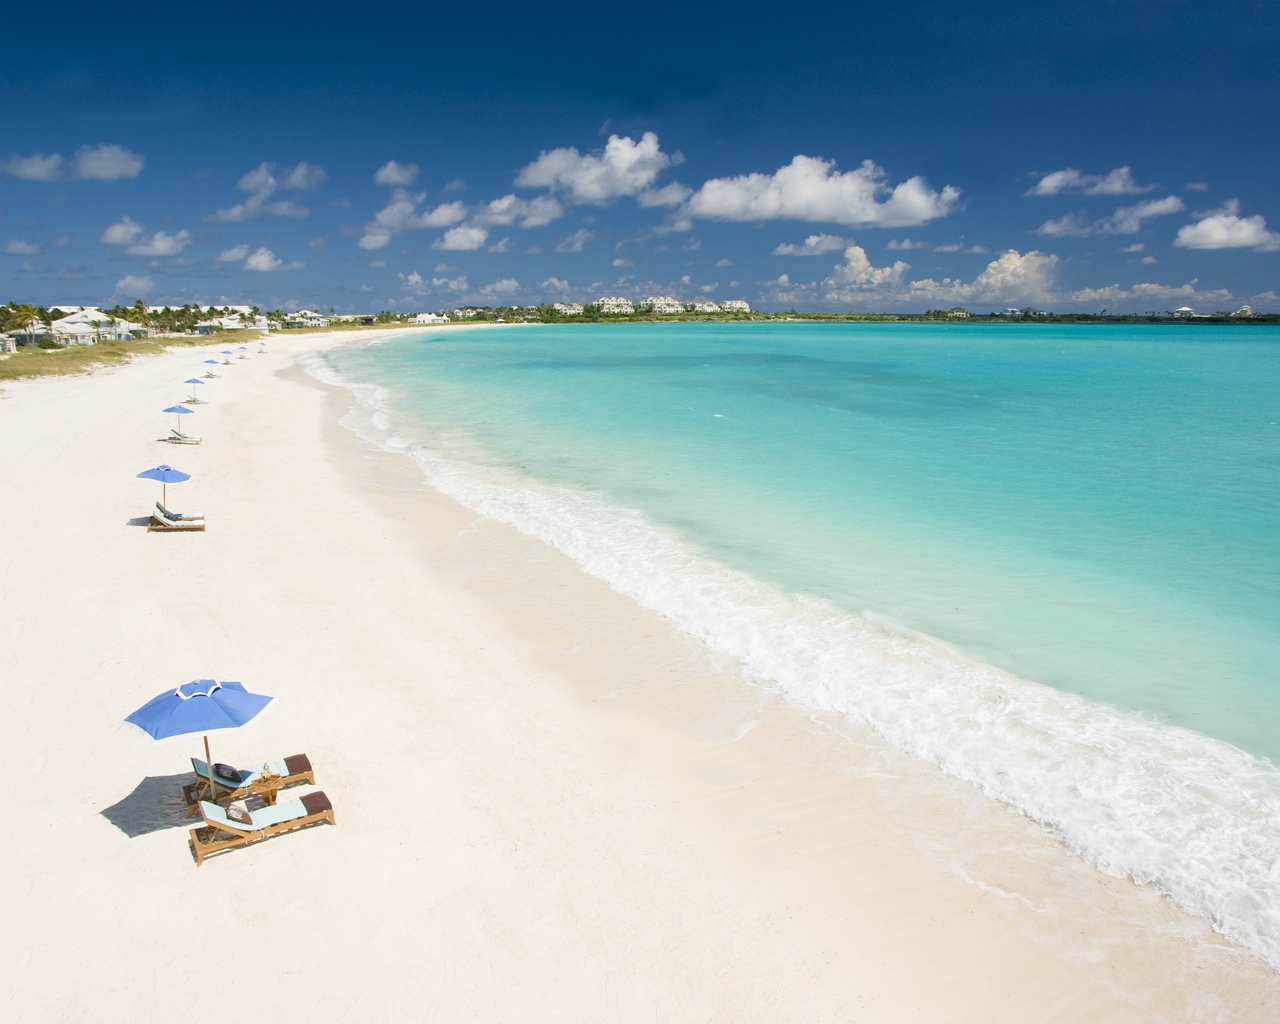 Caribbean Beach for 1280 x 1024 resolution